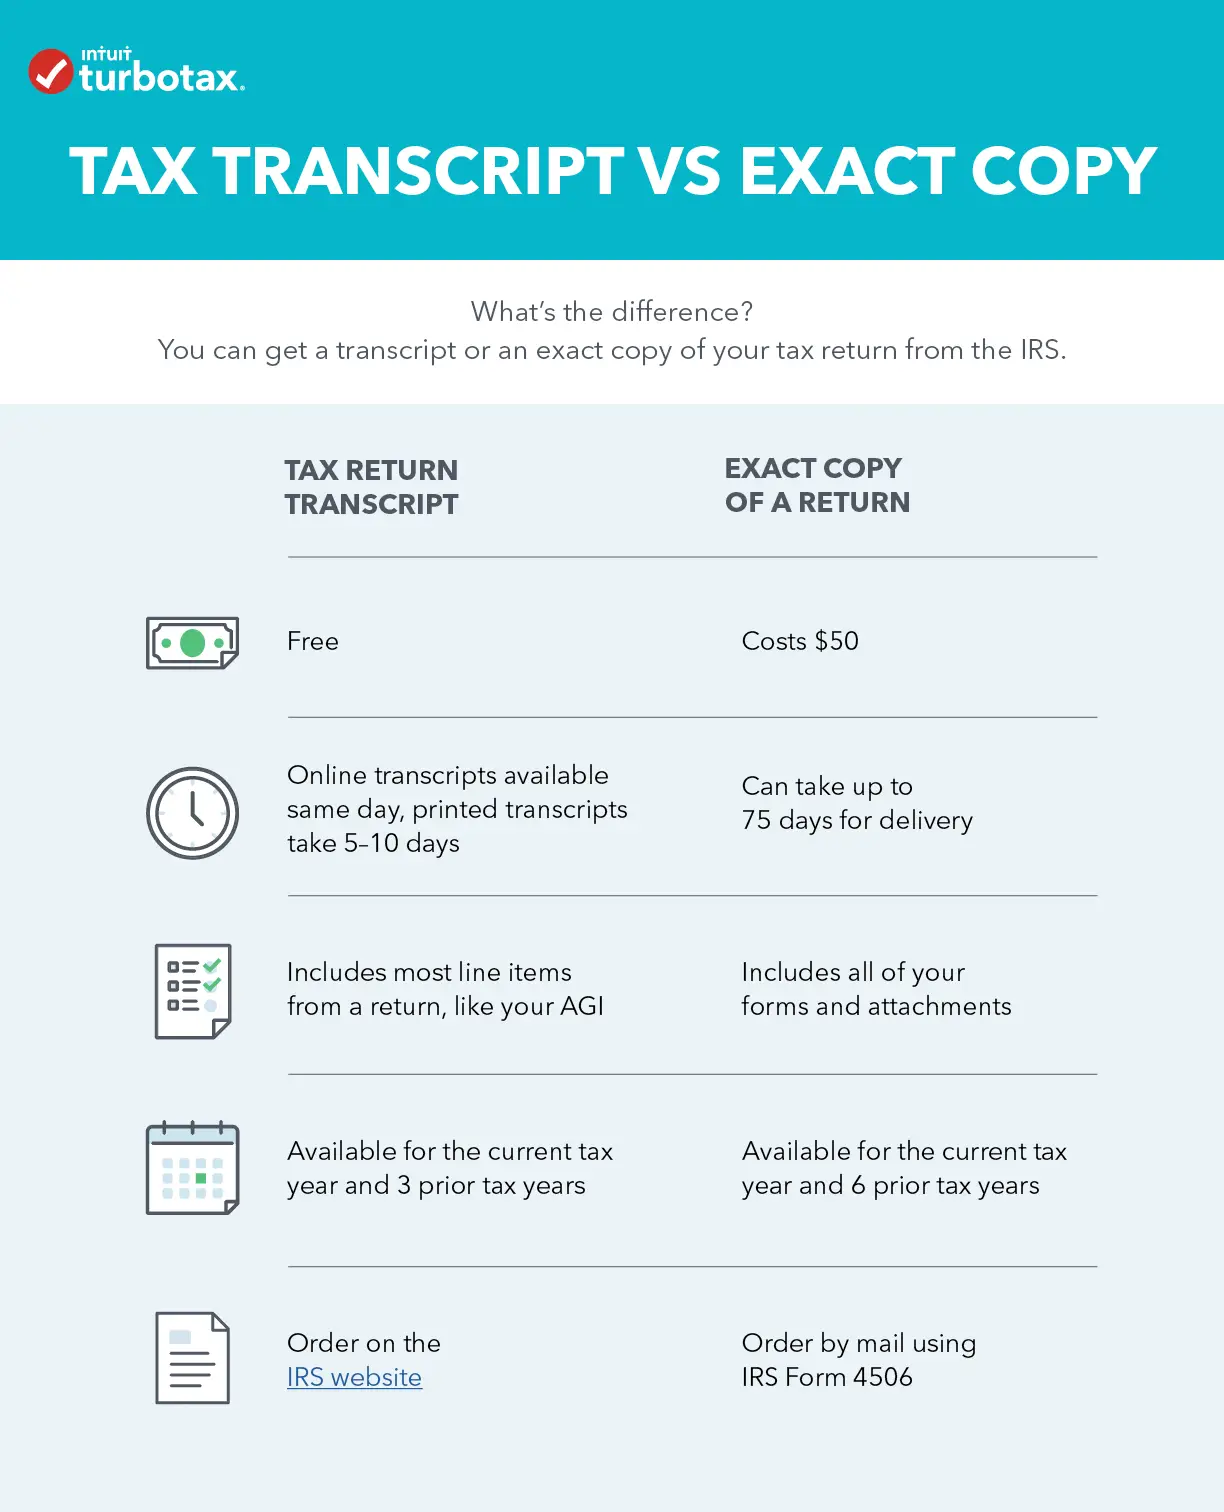 How do I get a copy of my tax return or transcript